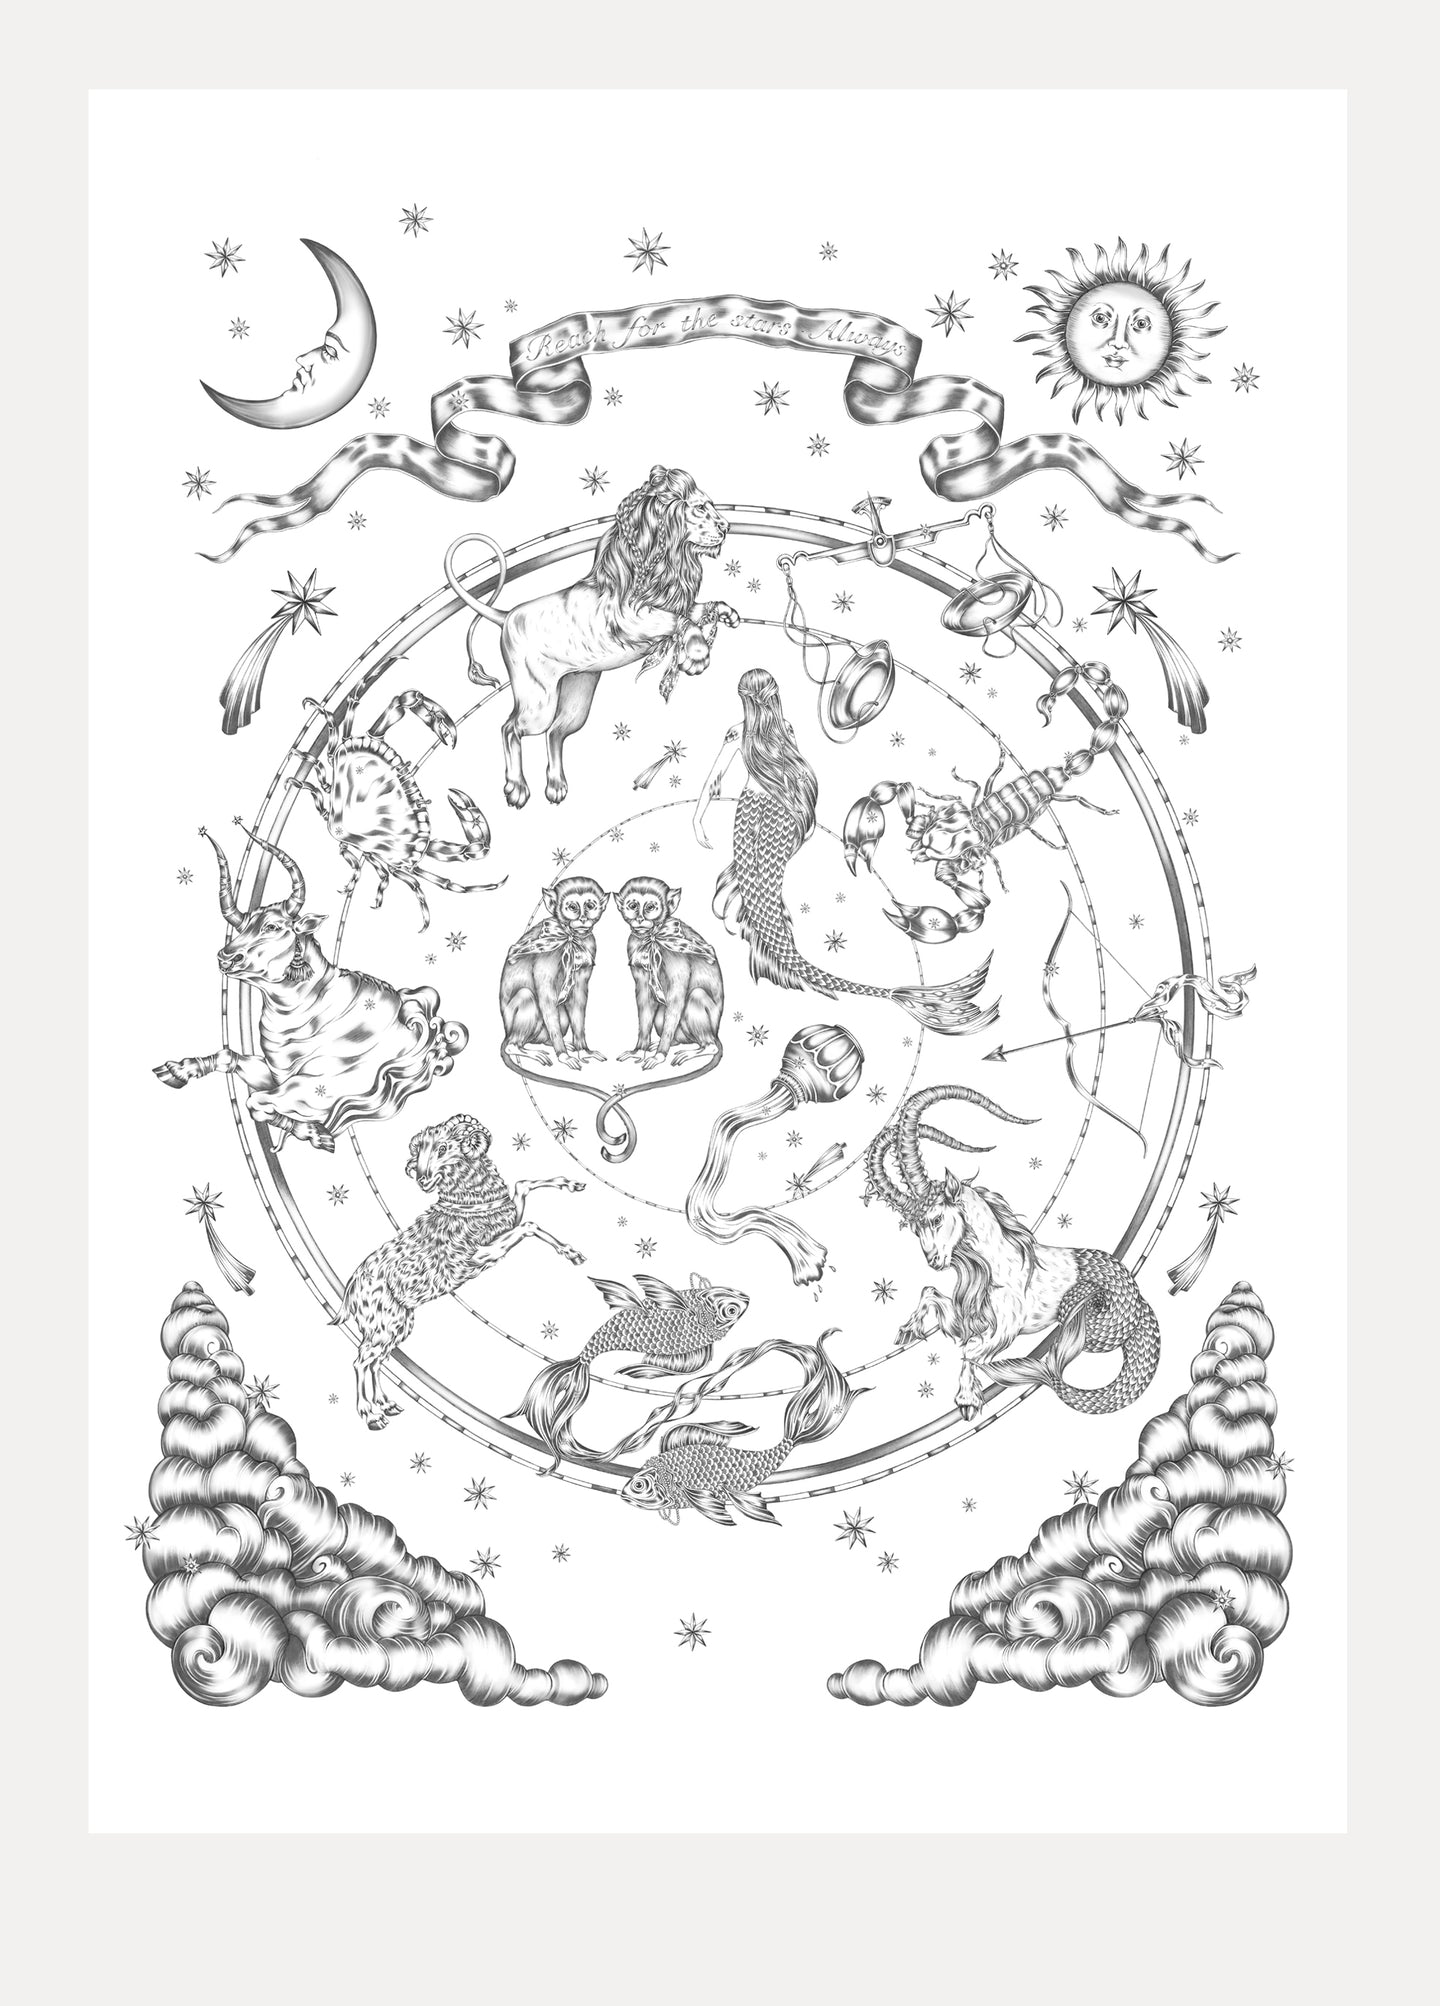 Astrology Art Print (Feature all zodiac signs)